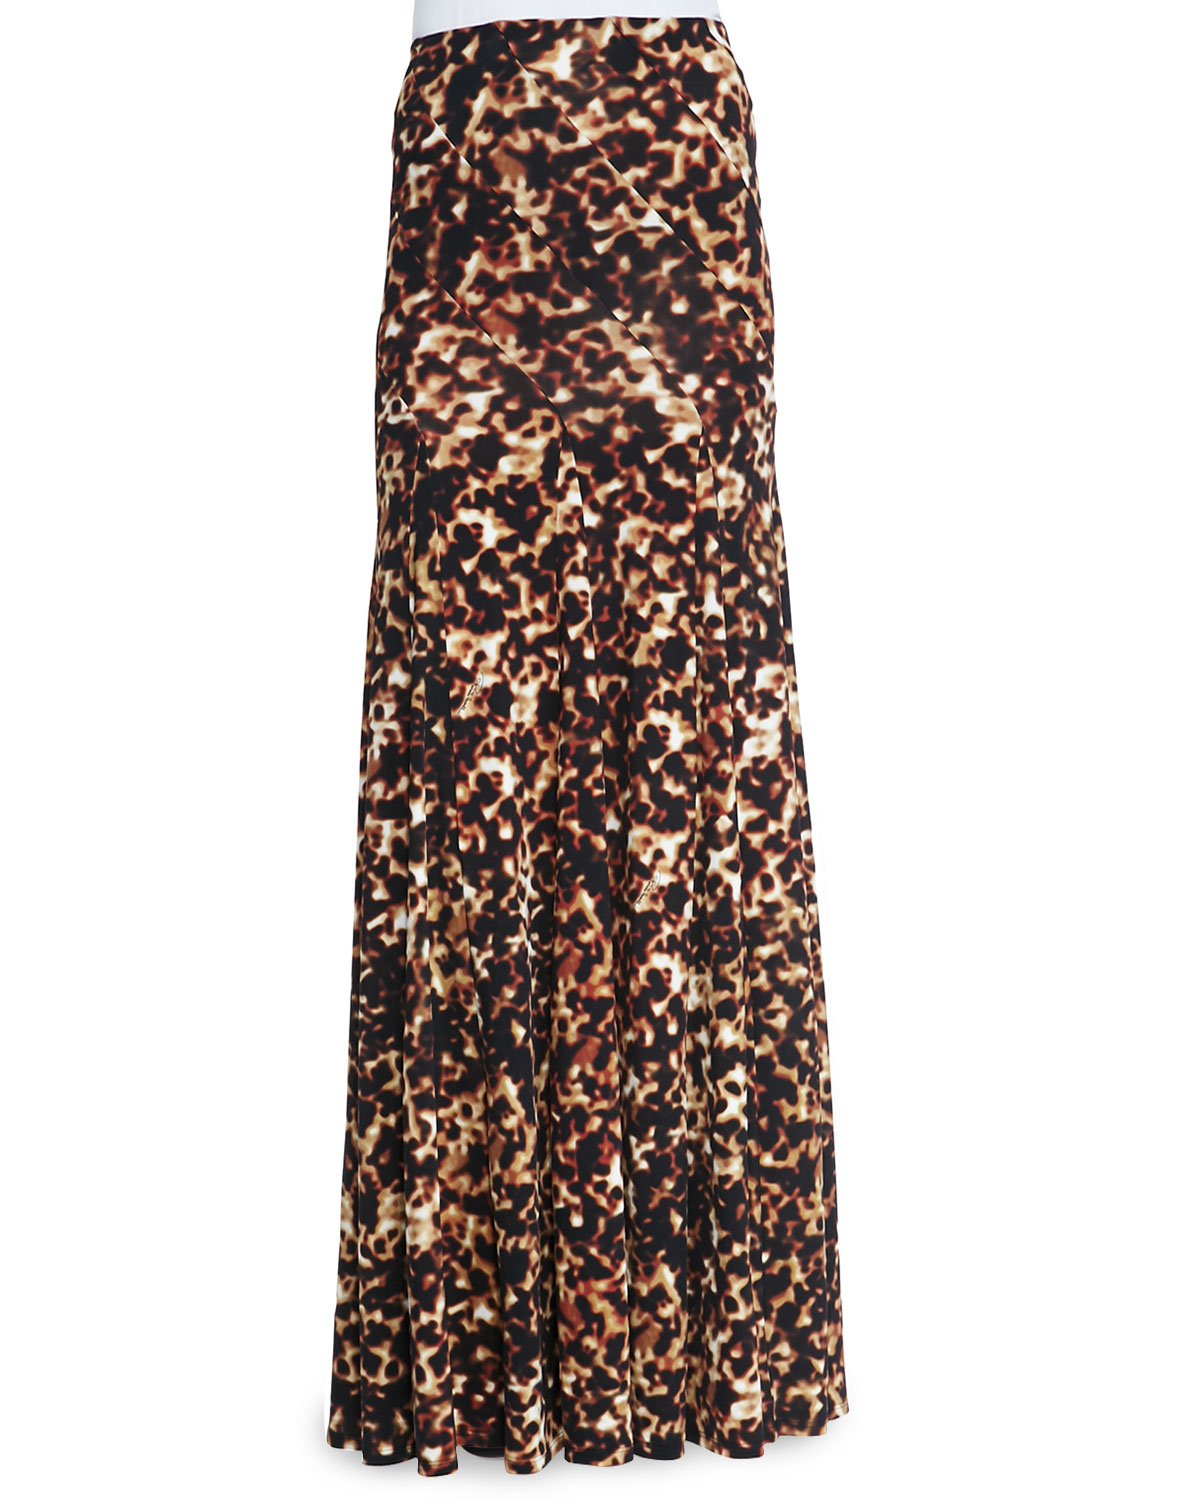 Roberto Cavalli Long Leopard Print Skirt in Brown - Lyst